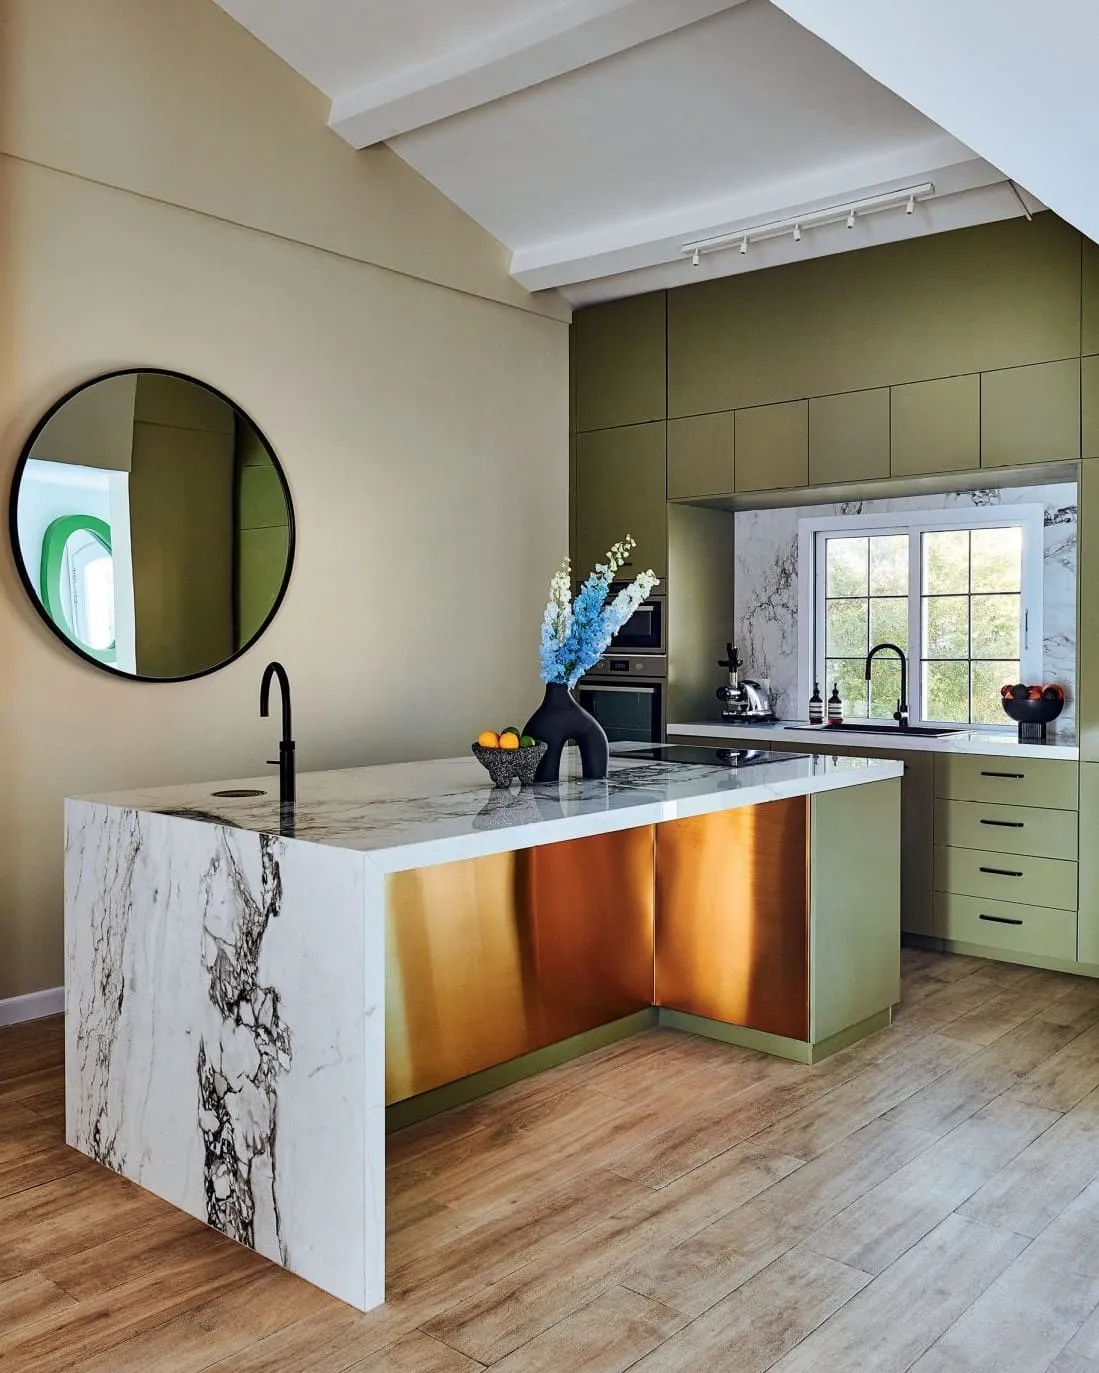 Kitchen featuringa a marble kitchen island and a circular mirror